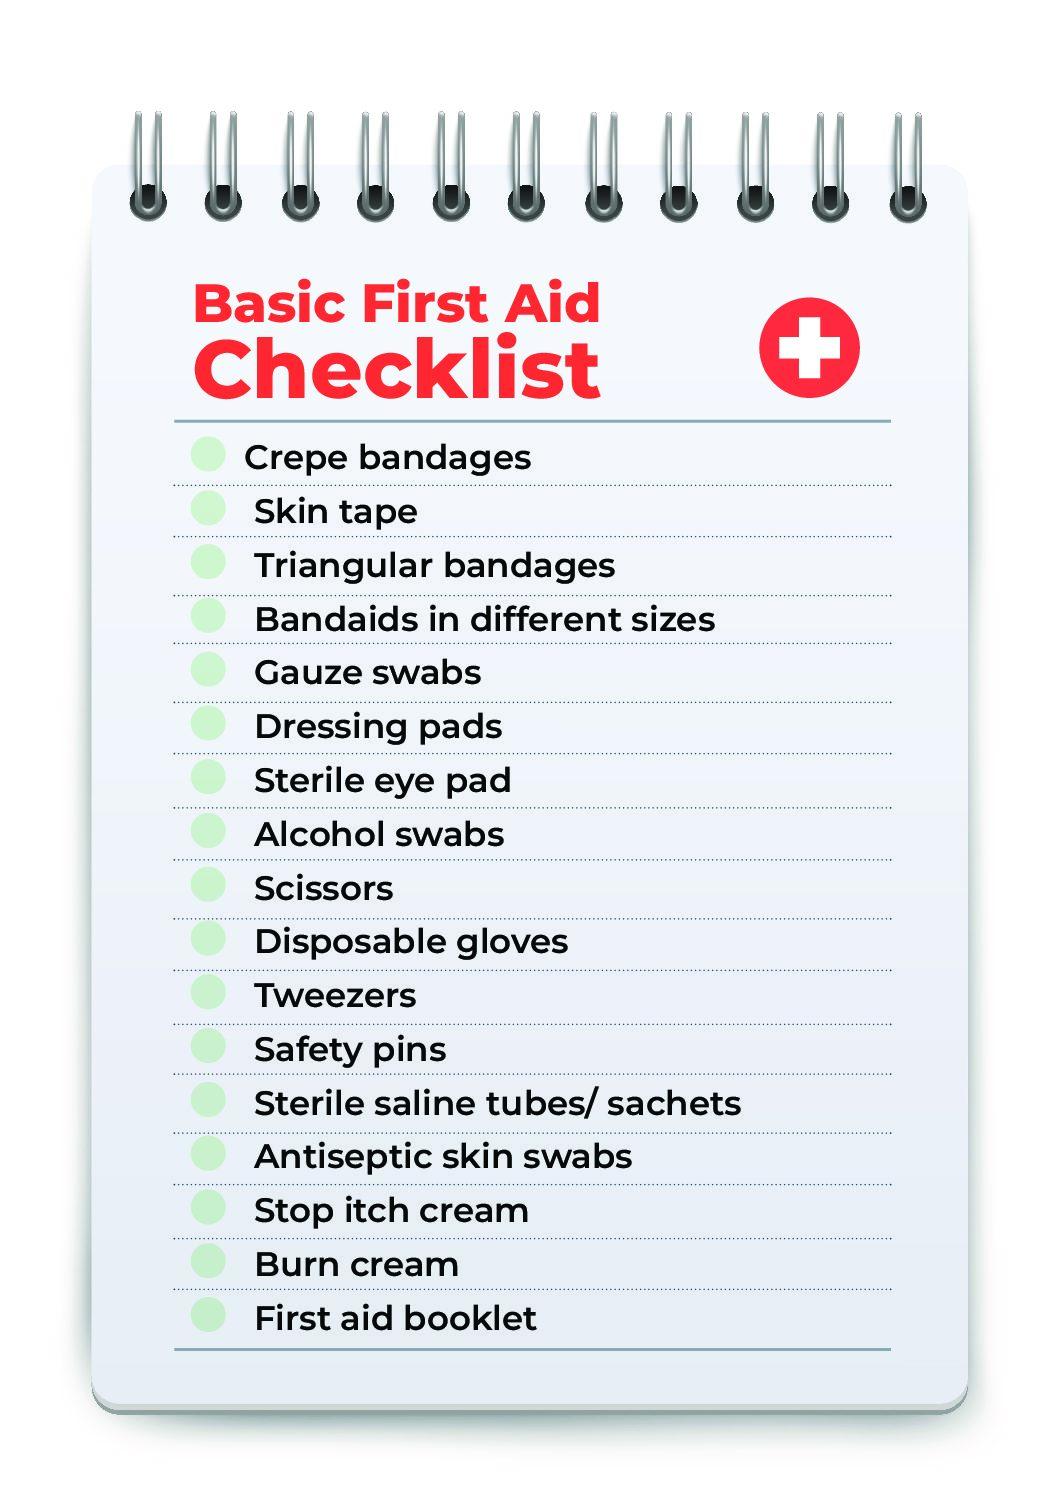 basic first aid kit items